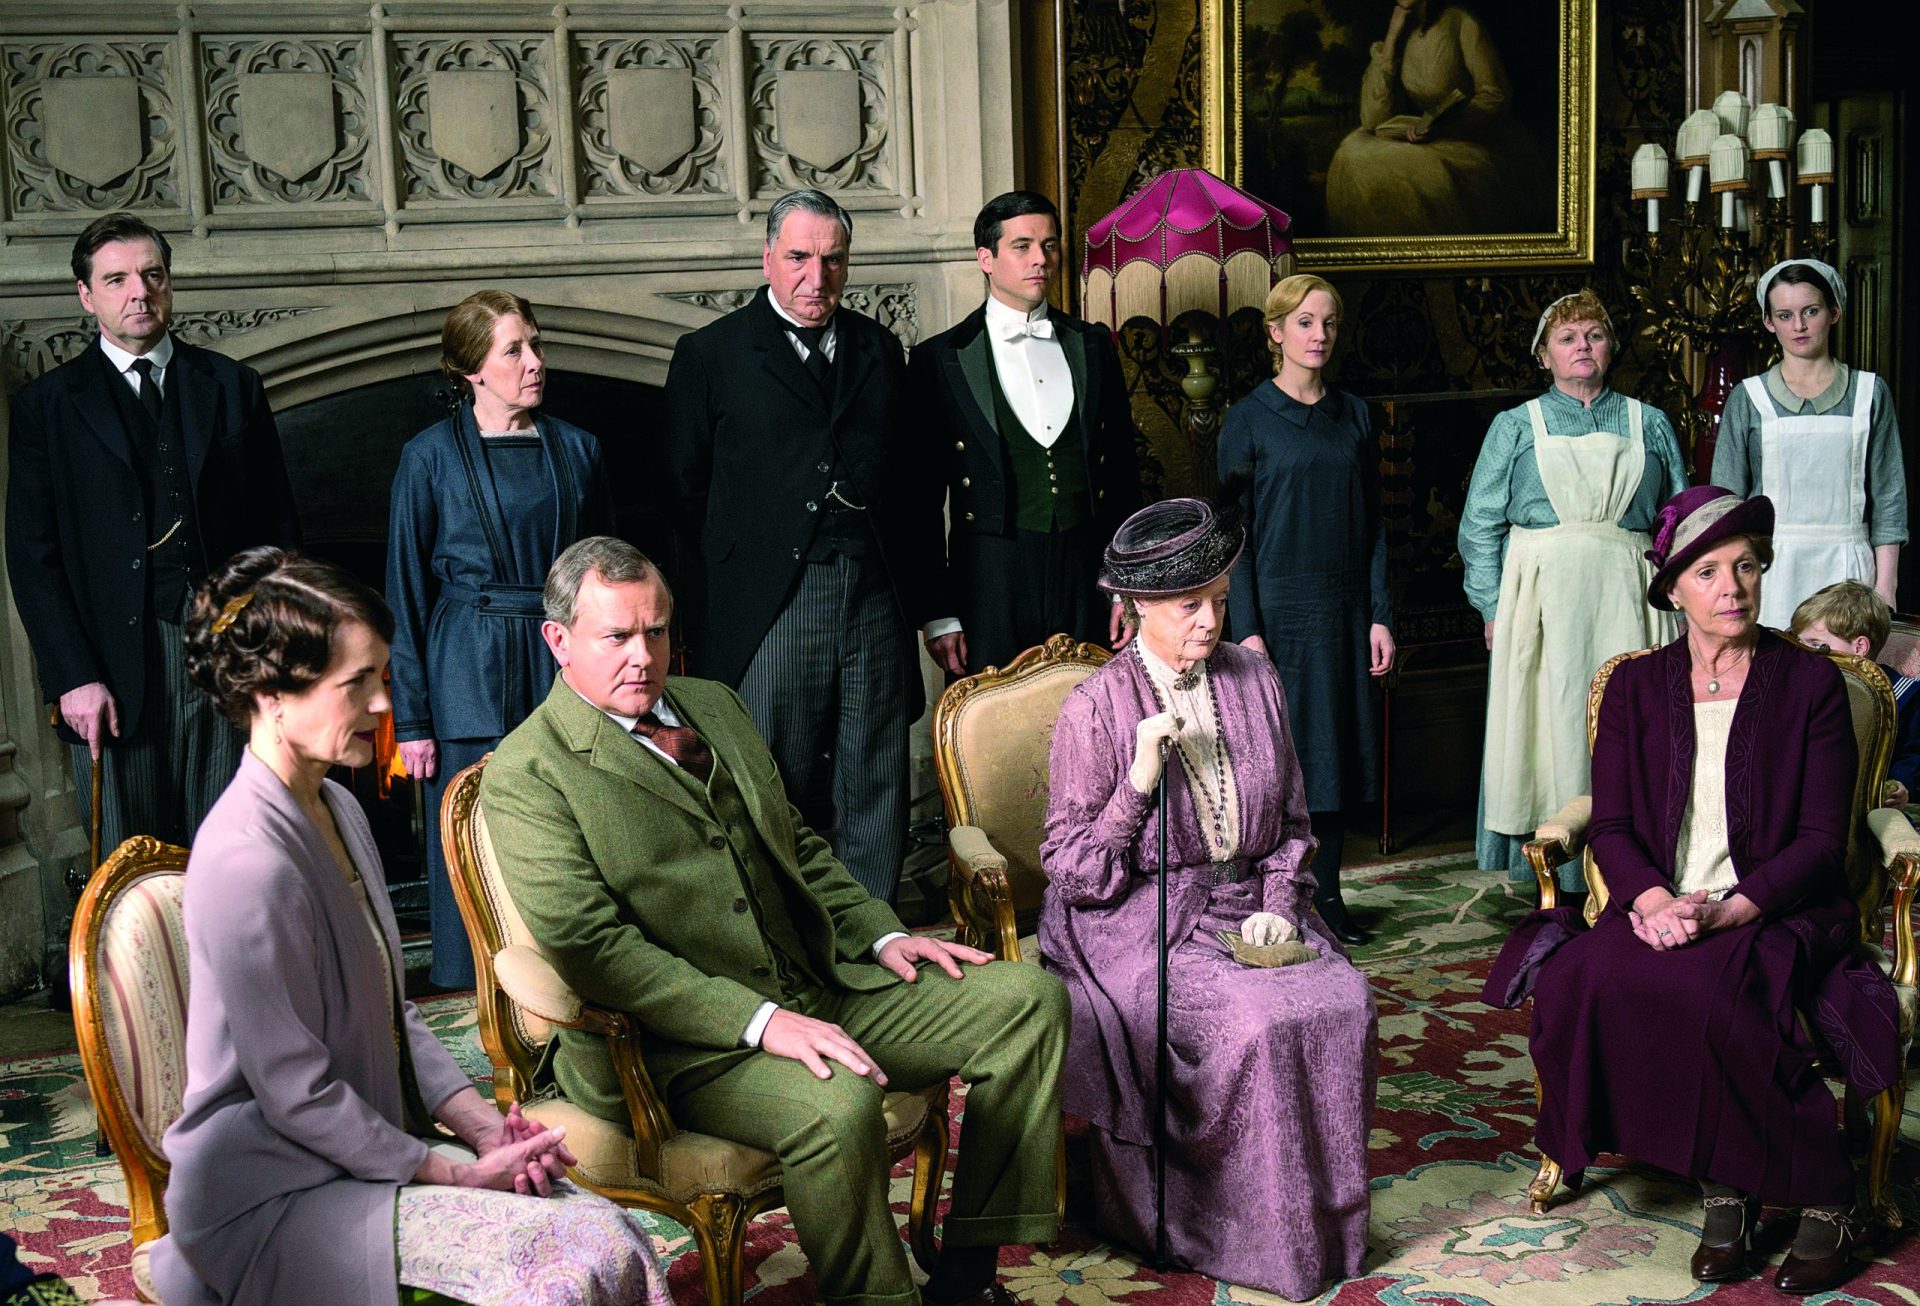 Estreia-se hoje 5ª temporada de Downton Abbey